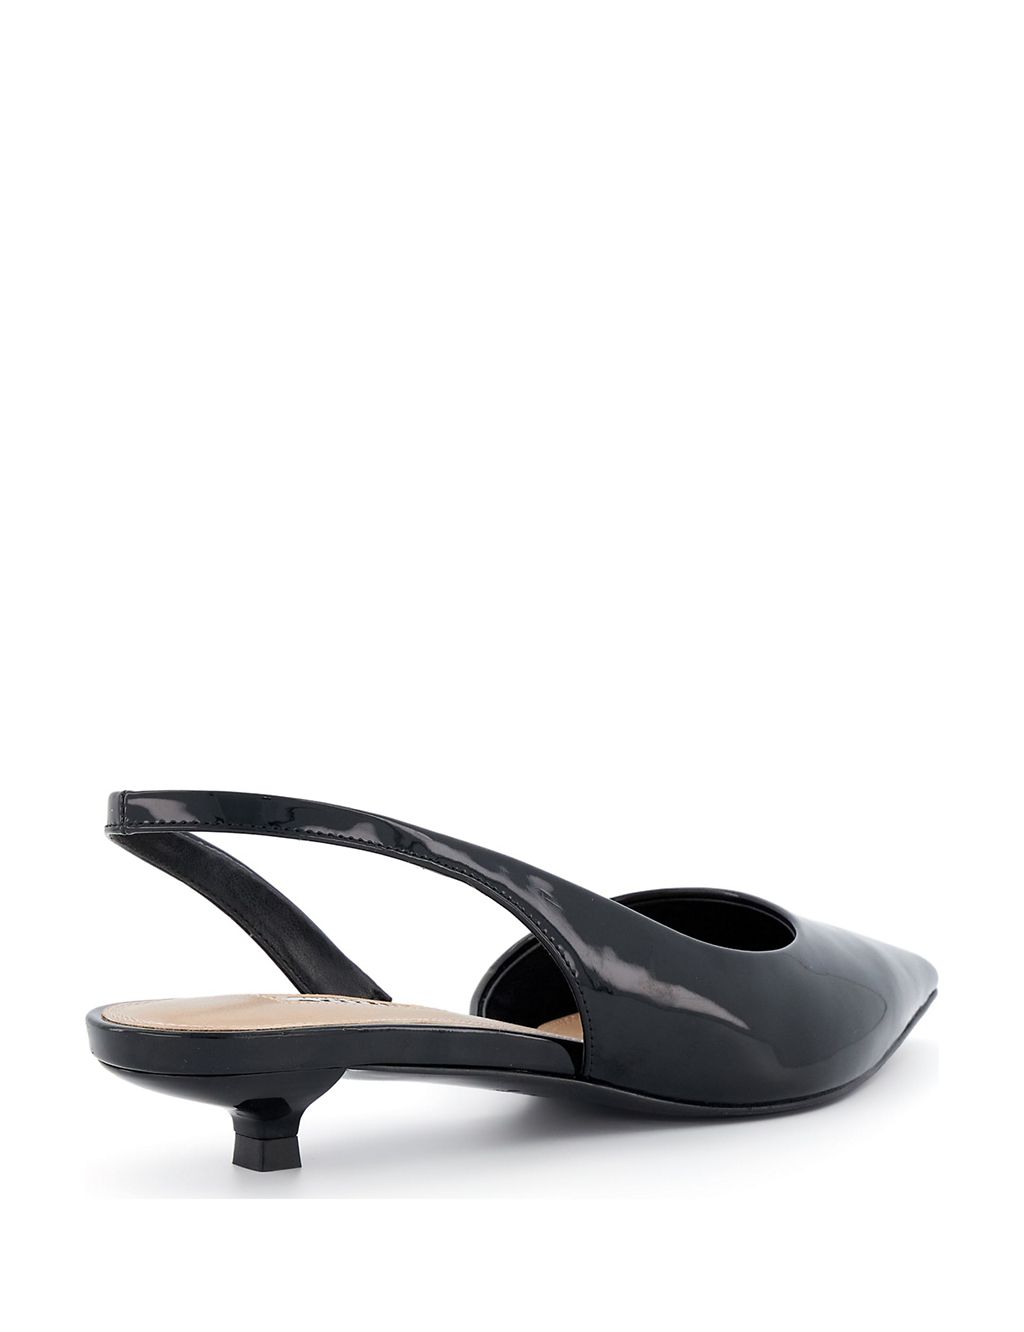 Patent Kitten Heel Pointed Slingback Shoes | Dune London | M&S